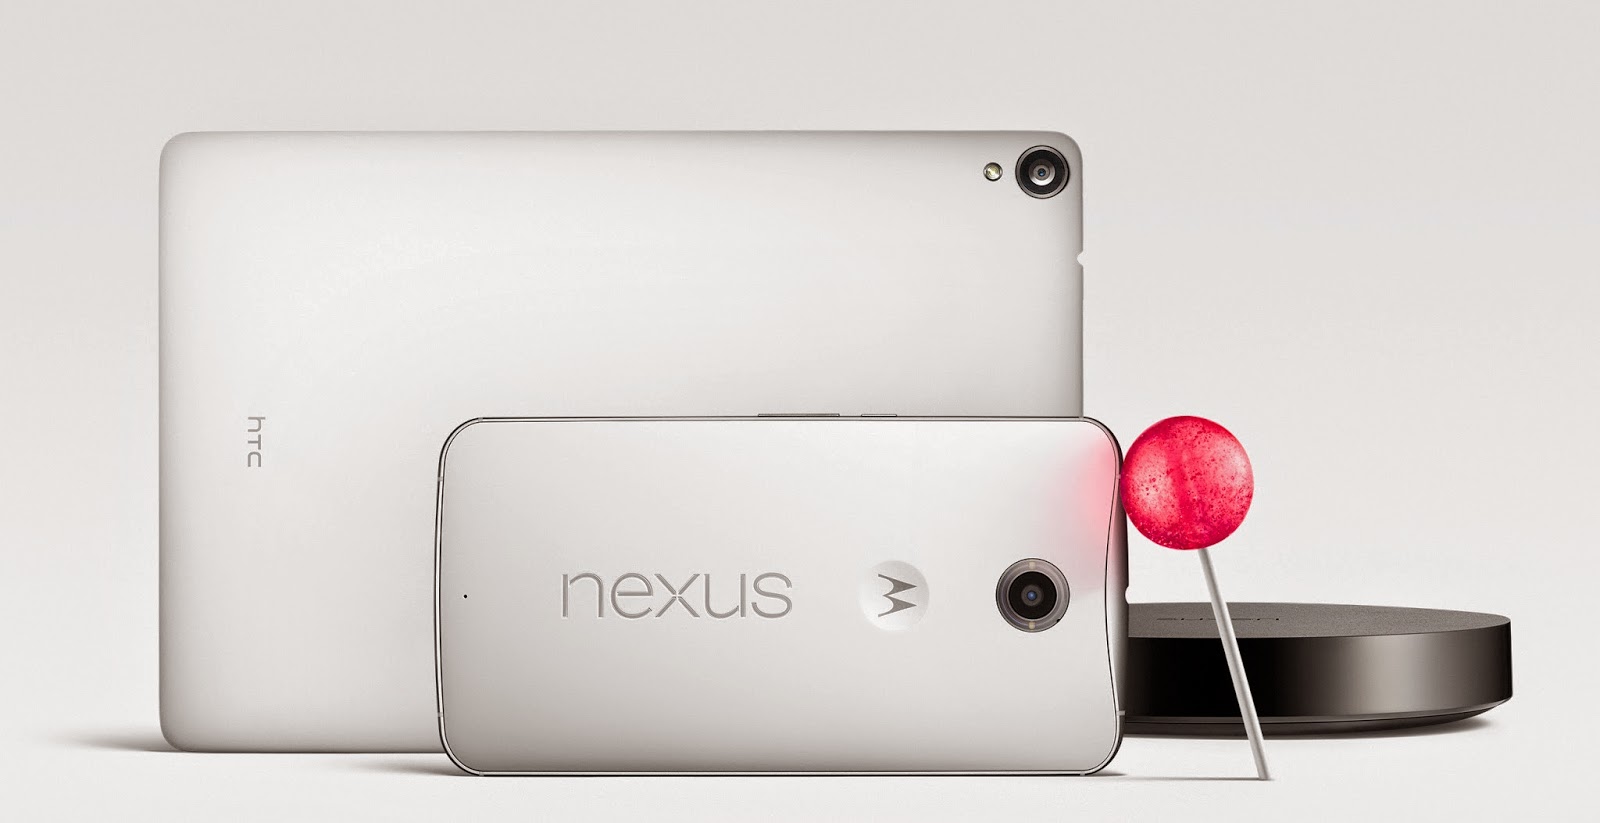 Nexus 2014 Series - Motorola Nexus 6, HTC Nexus 9, and Nexus Player